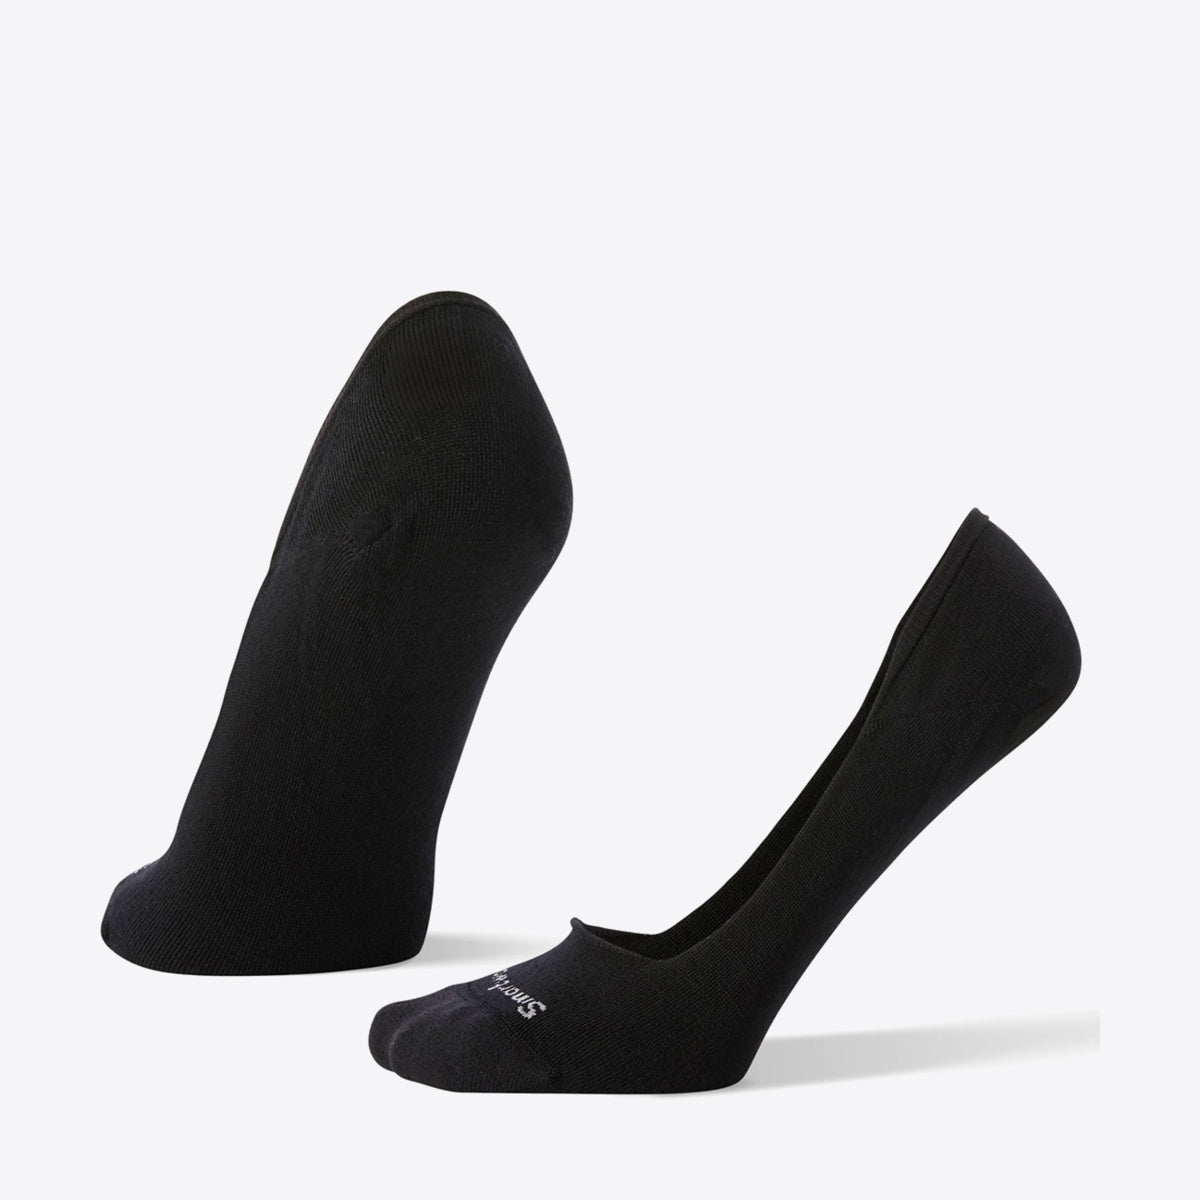 SMARTWOOL Women's Secret Sleuth No Show Socks Black - Image 2